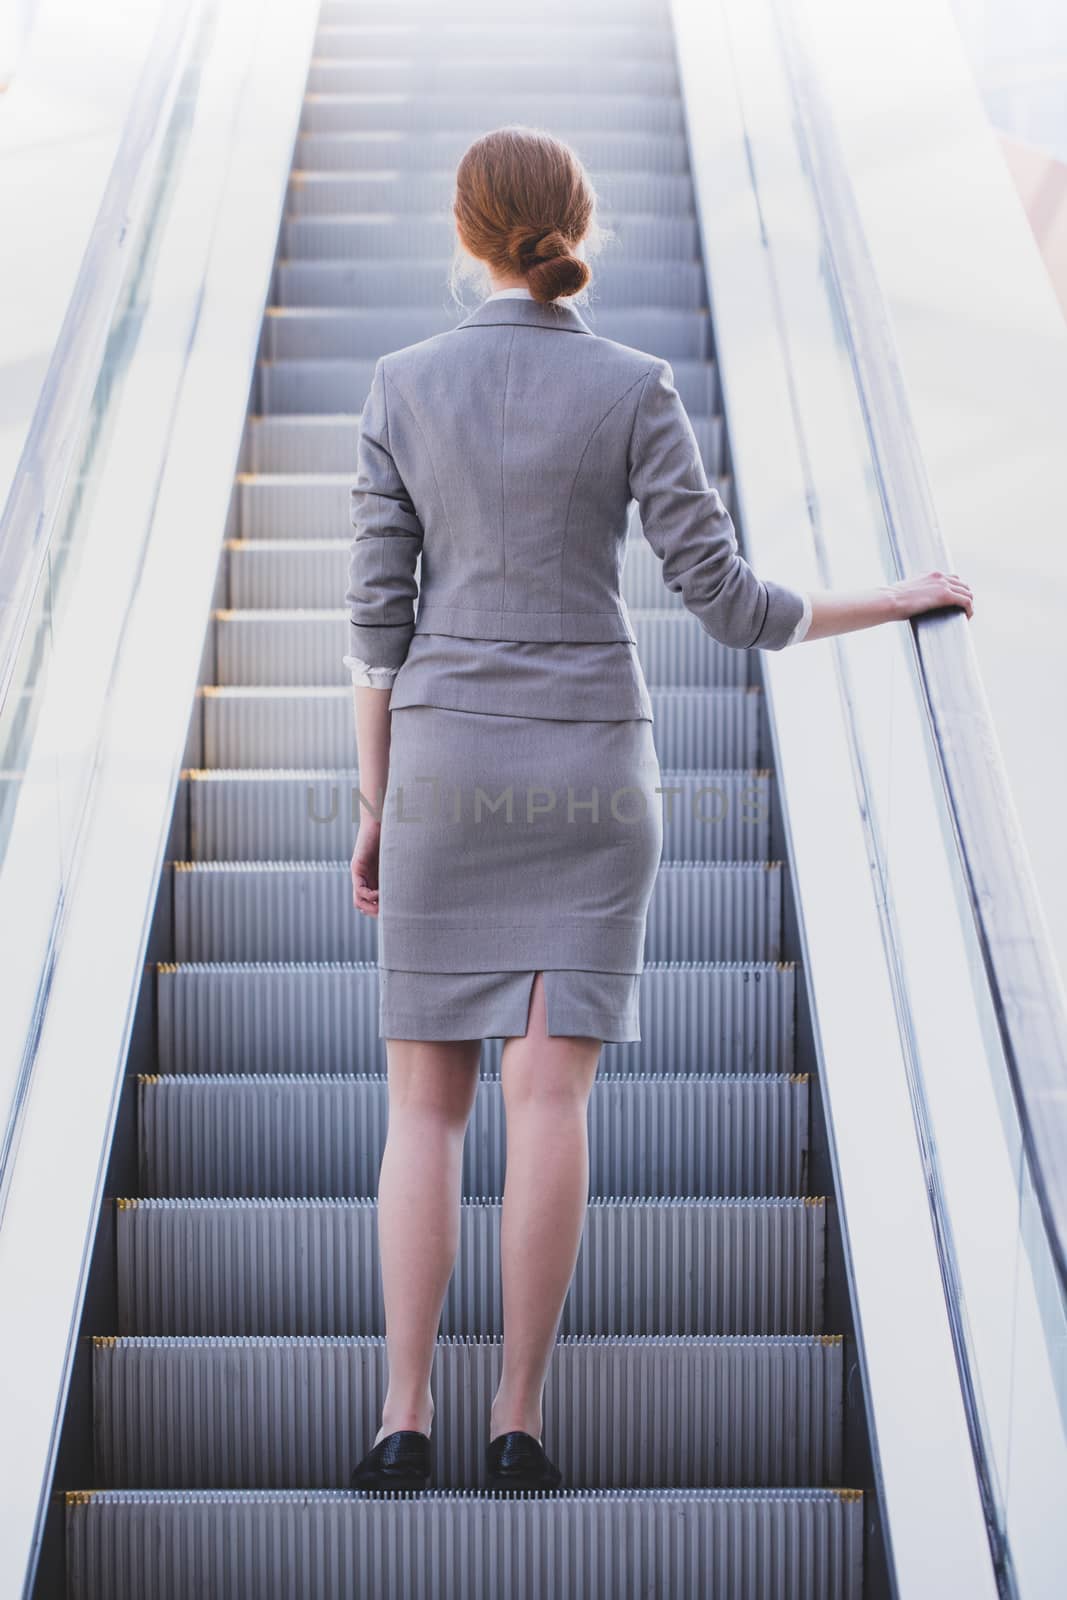 Businesswoman on escalator by ALotOfPeople